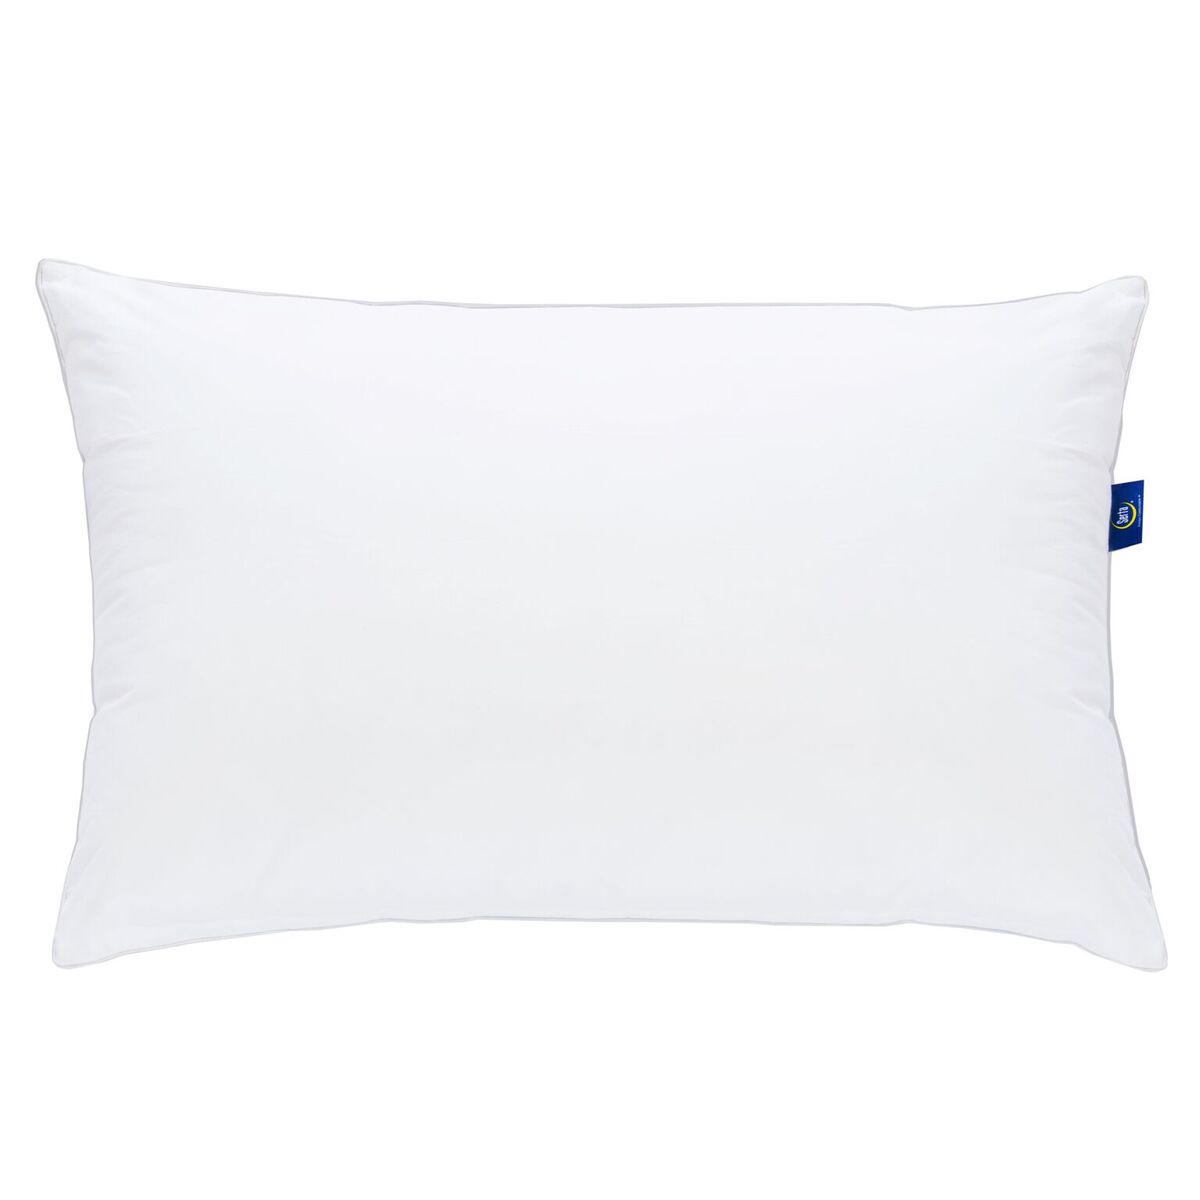 Sertapedic Down Alternative Pillow - image 5 of 5